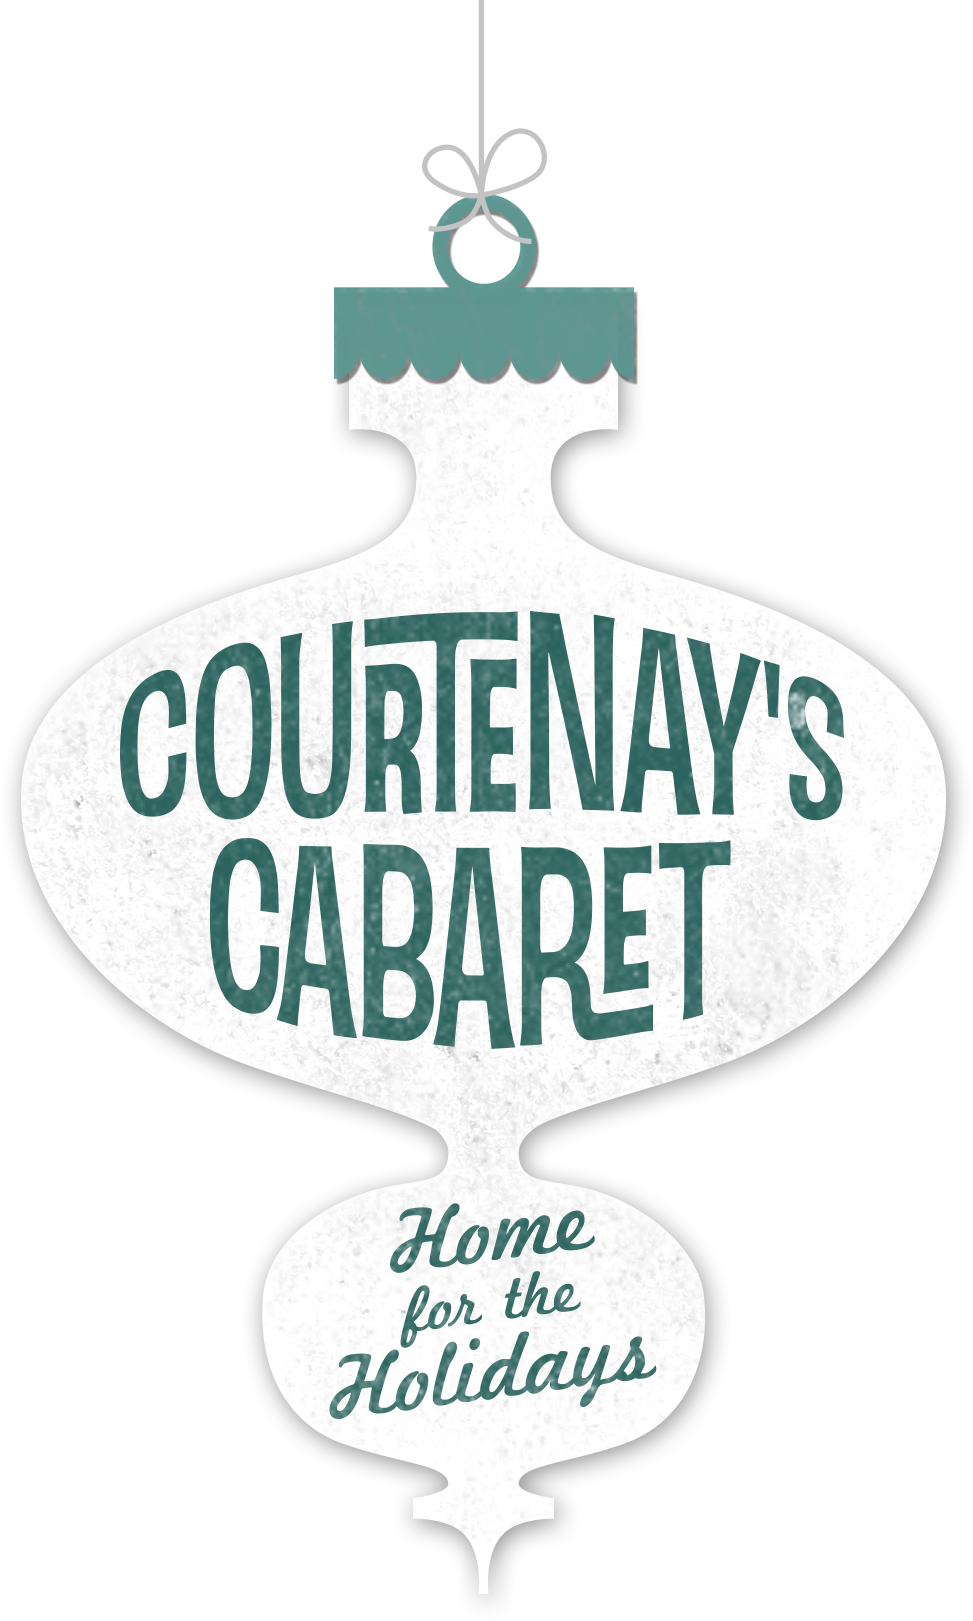 Courtenay's